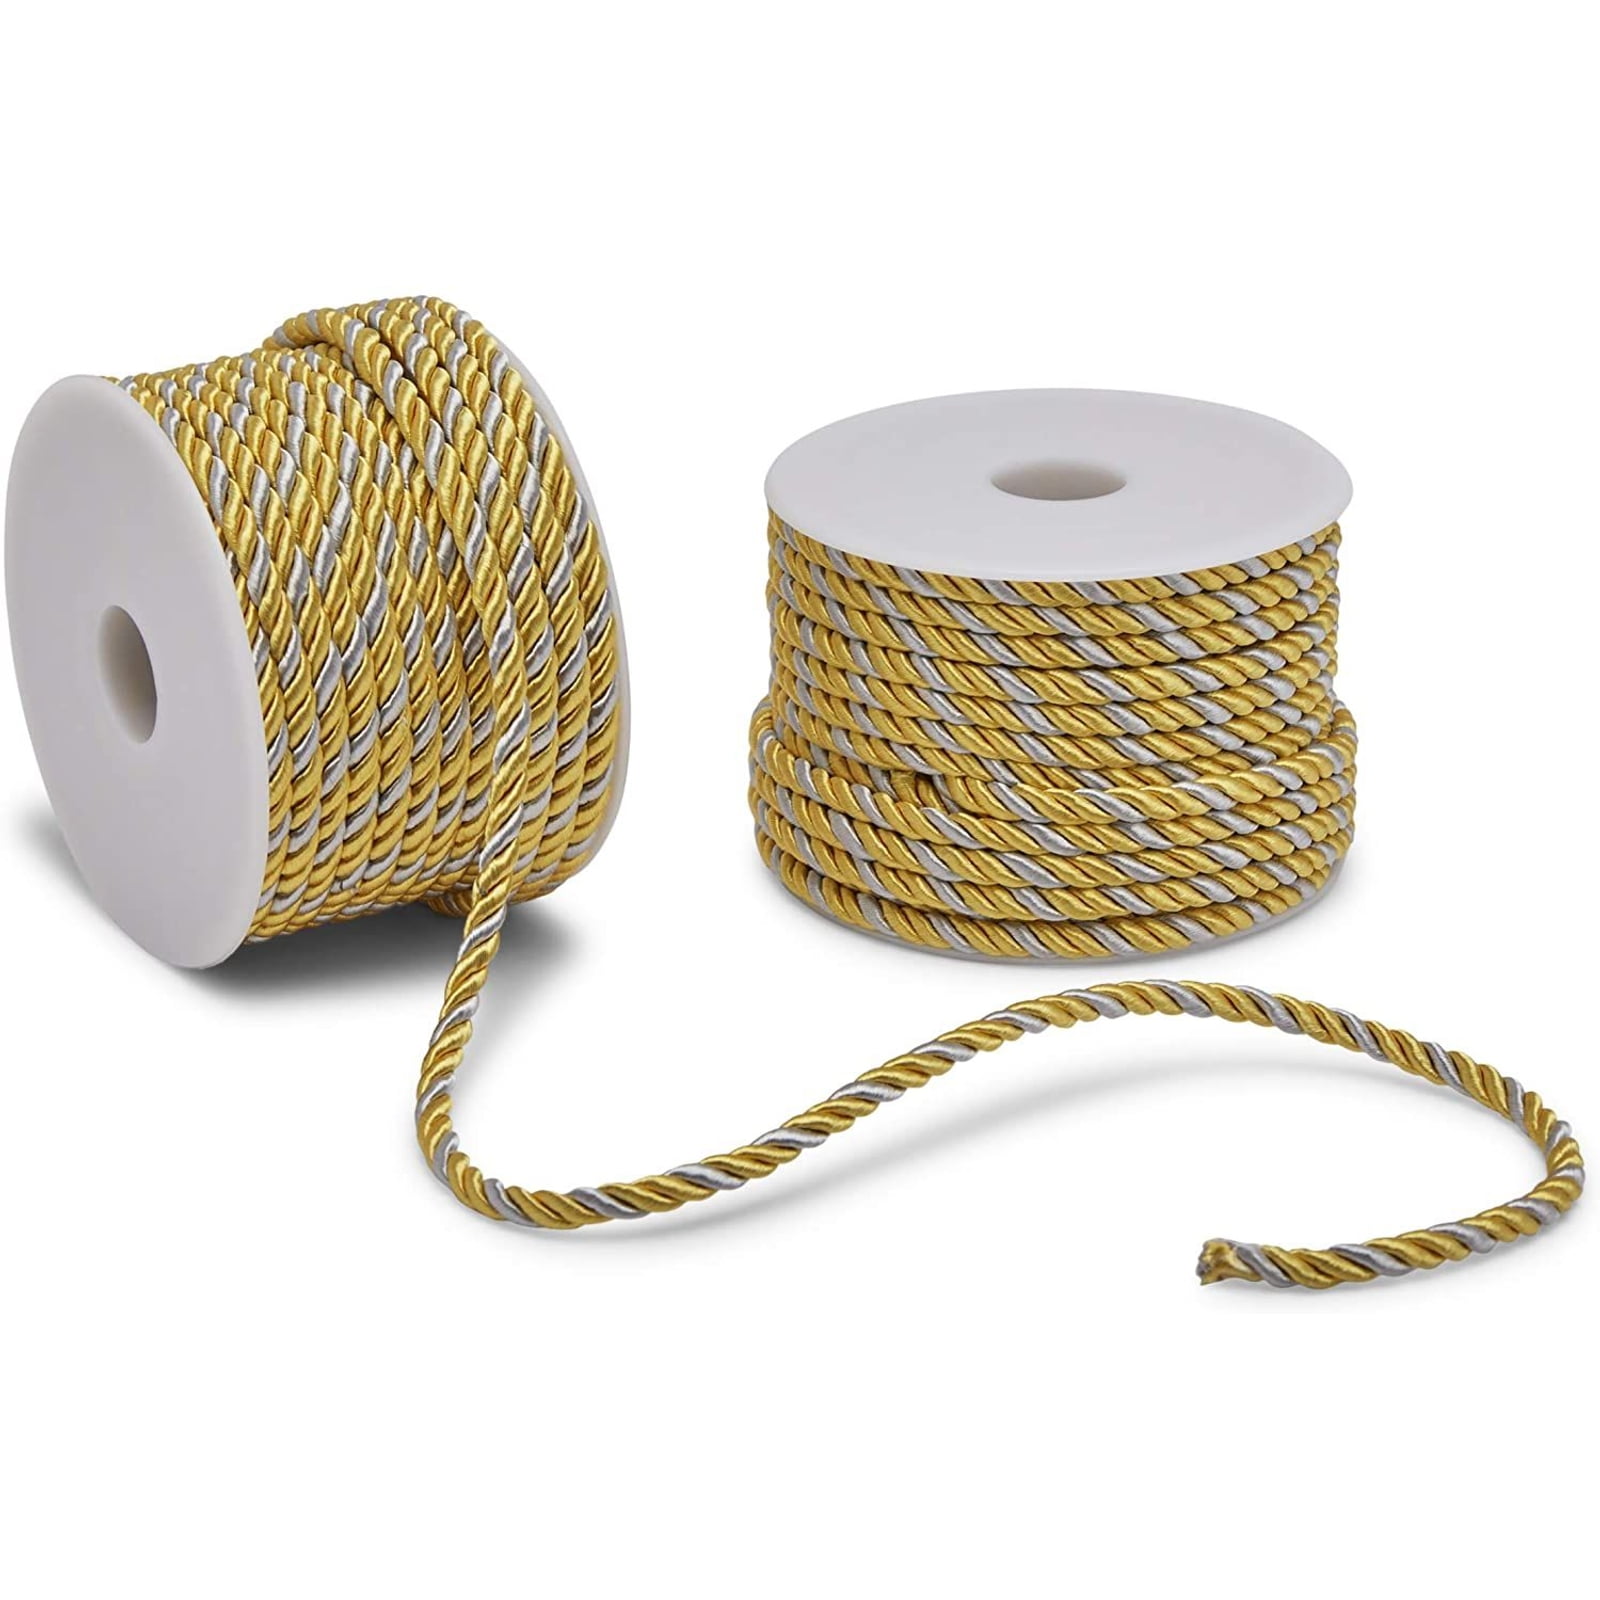 Twisted Stranded Cord PolyRope Line String Thread Yarn Polypropylene PP 1mm 